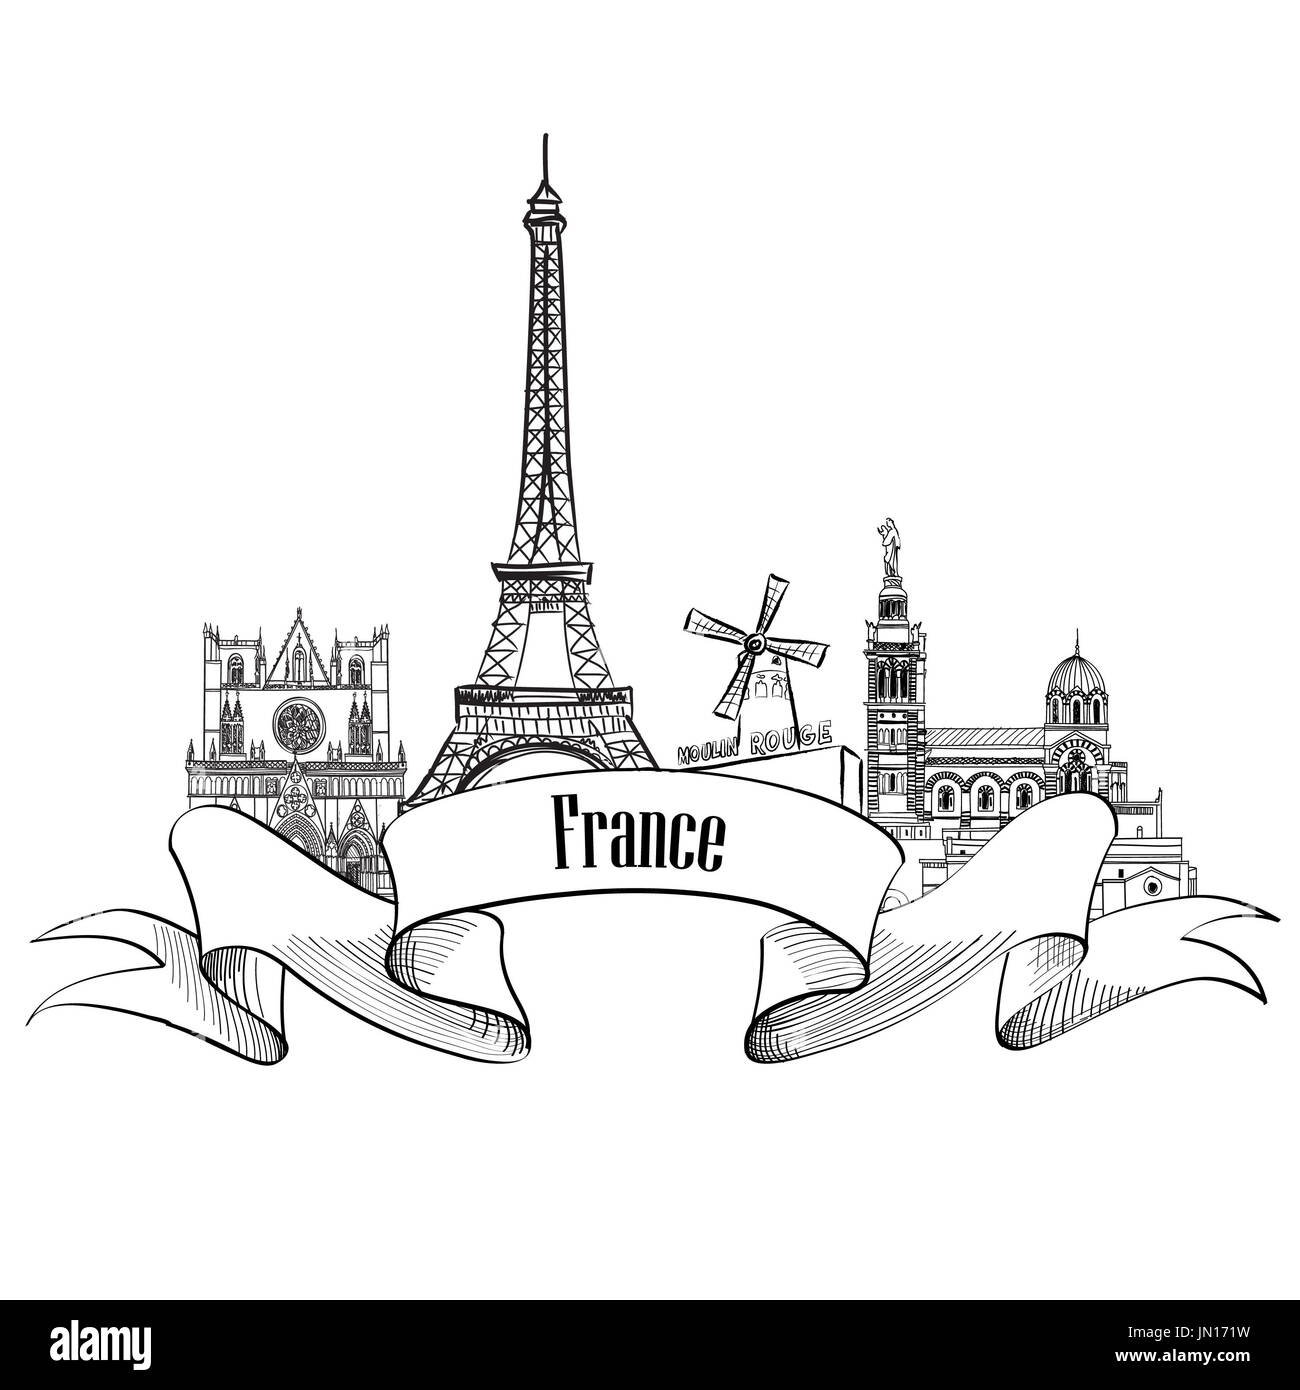 France label. Famous french architectural landmarks. Visit France banner. Stock Photo